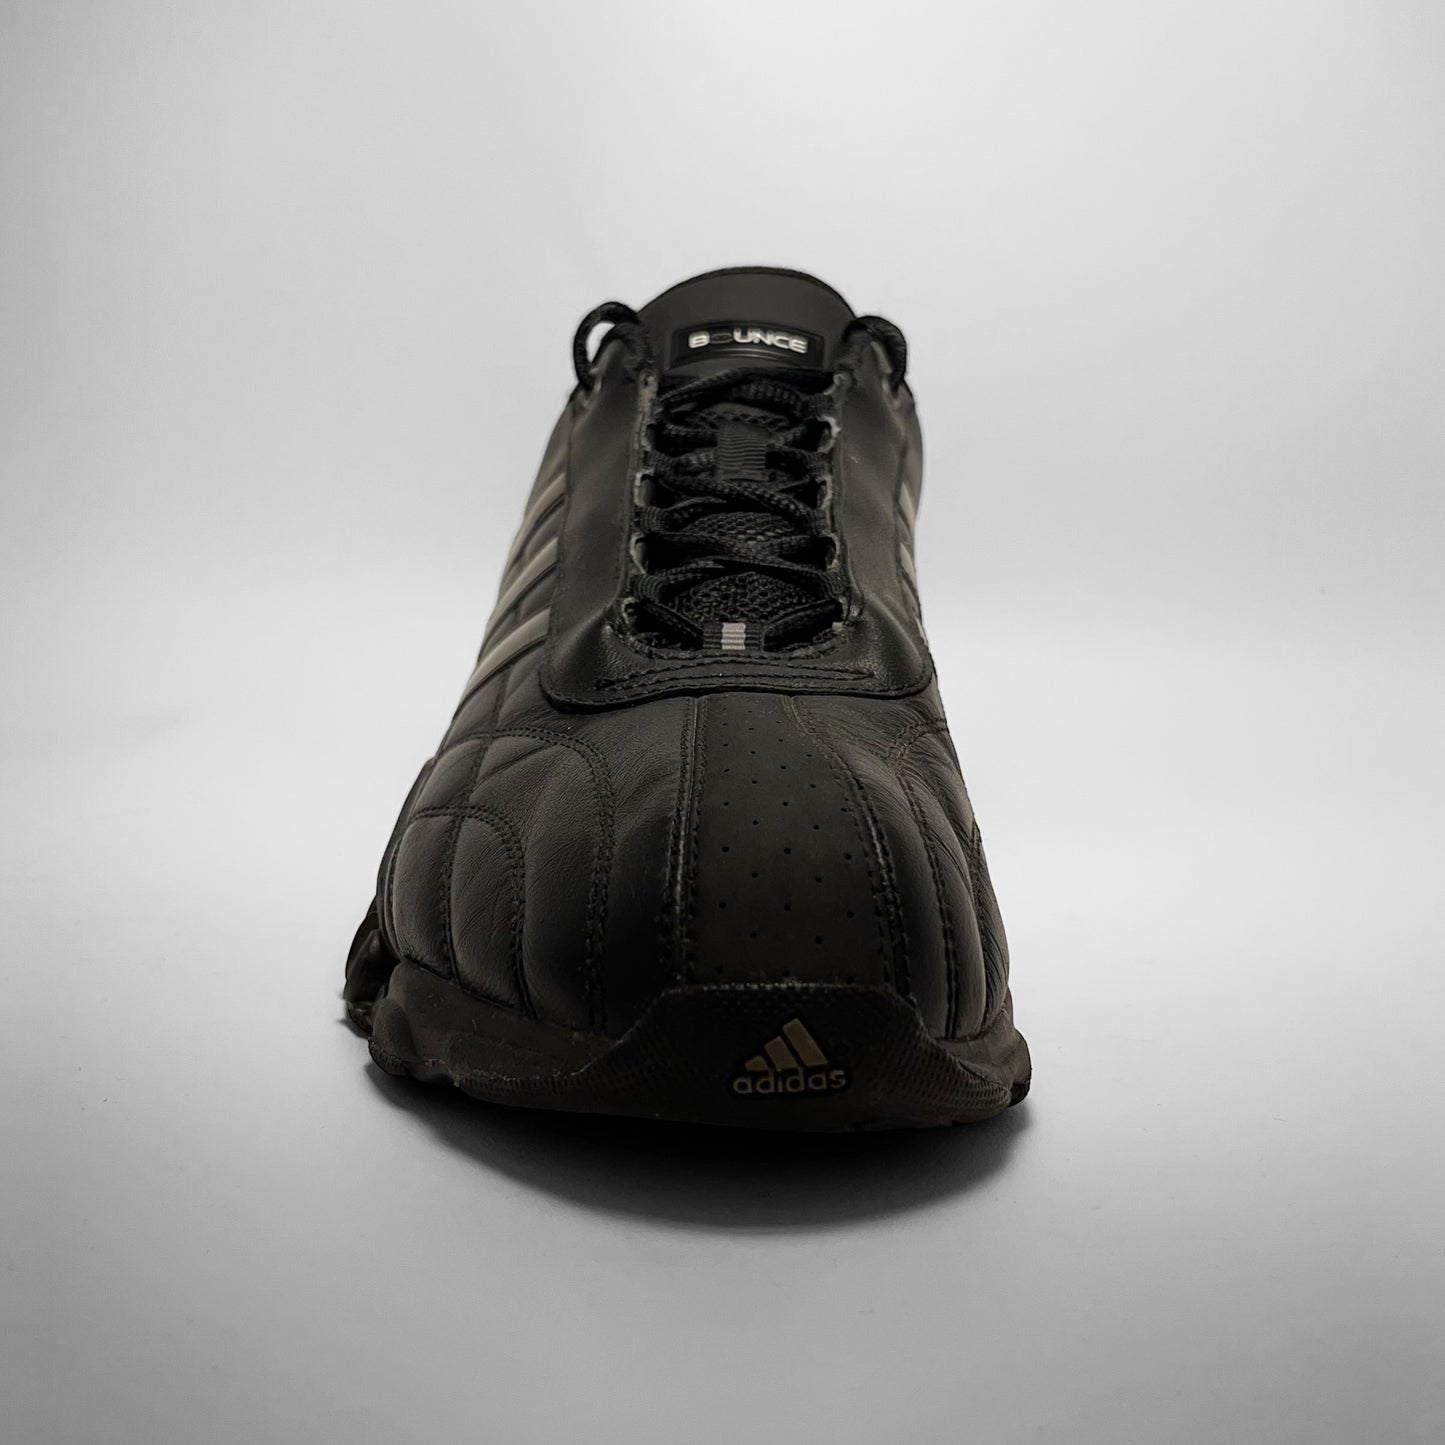 Adidas Leather Bounce (2011)